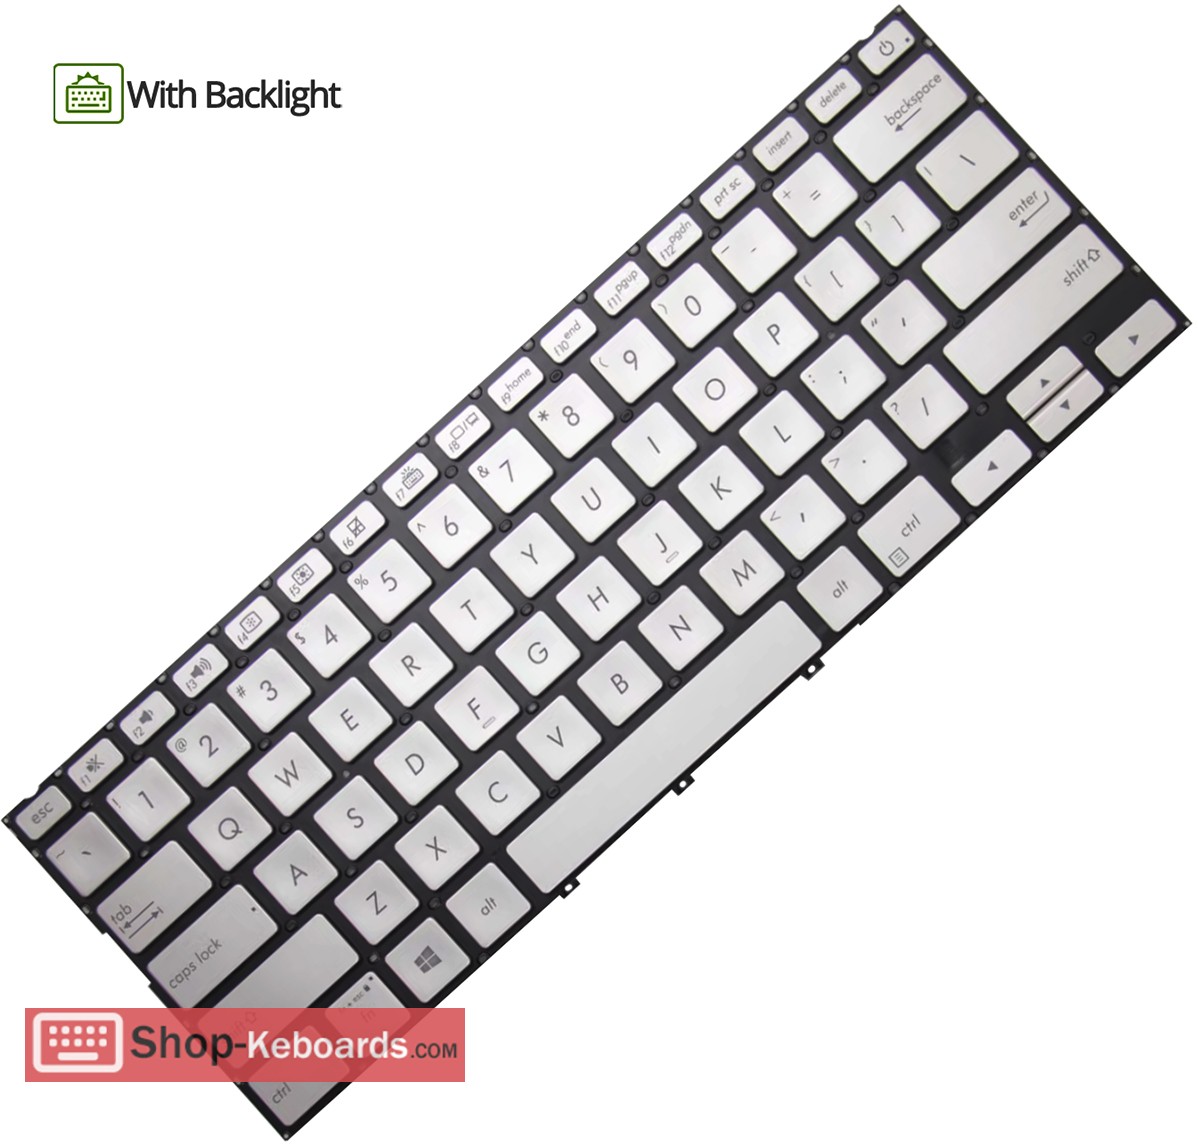 Asus 0KNB0-262HUK00 Keyboard replacement